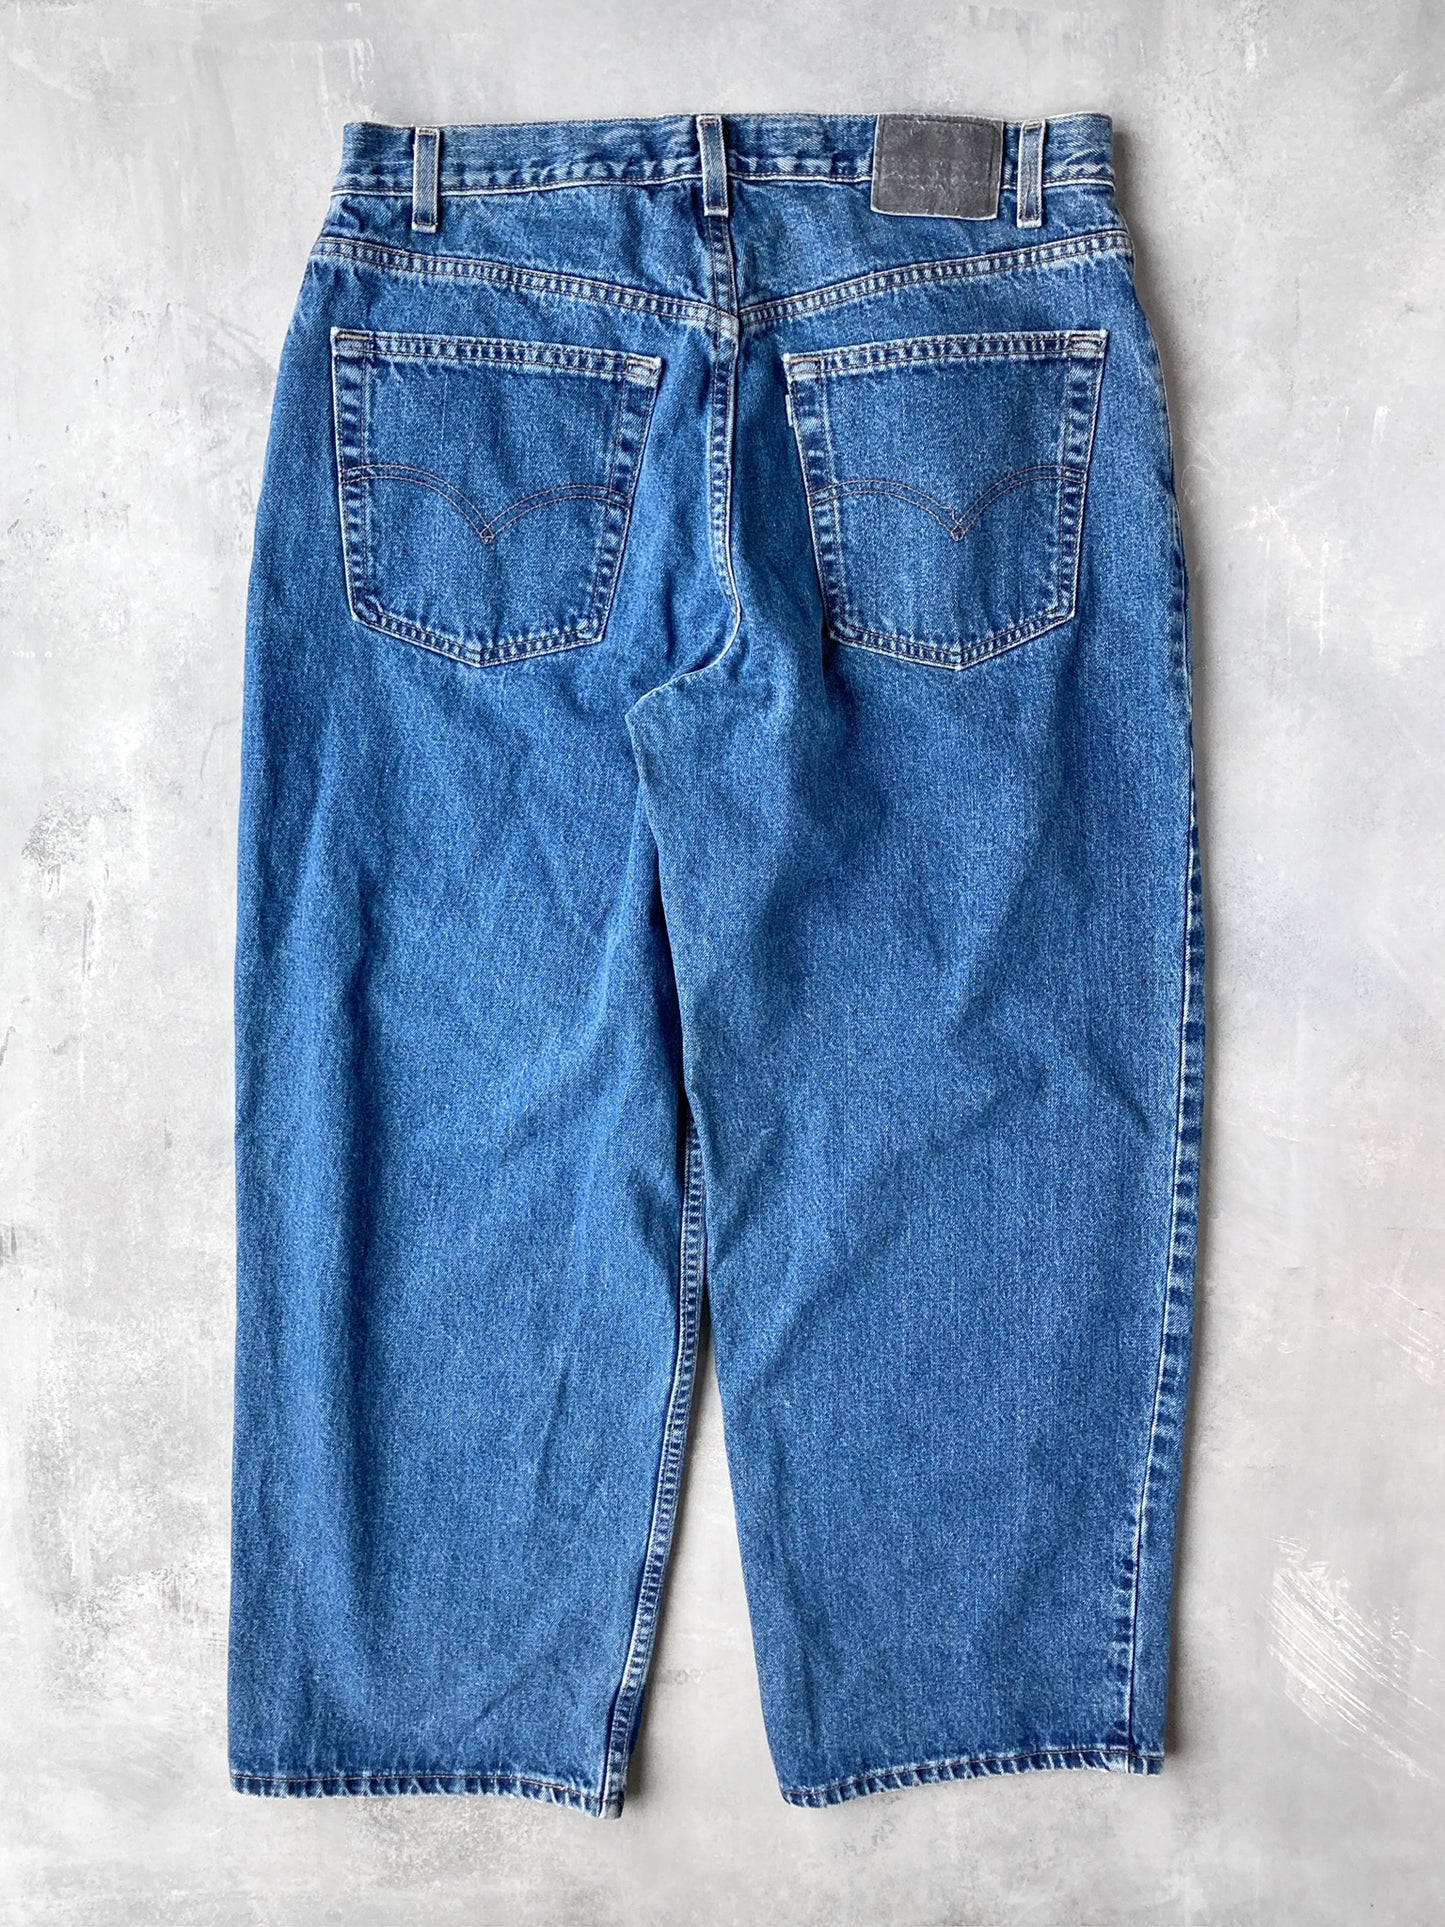 Levi's SilverTab Baggy Jeans '98 - 35 x 30